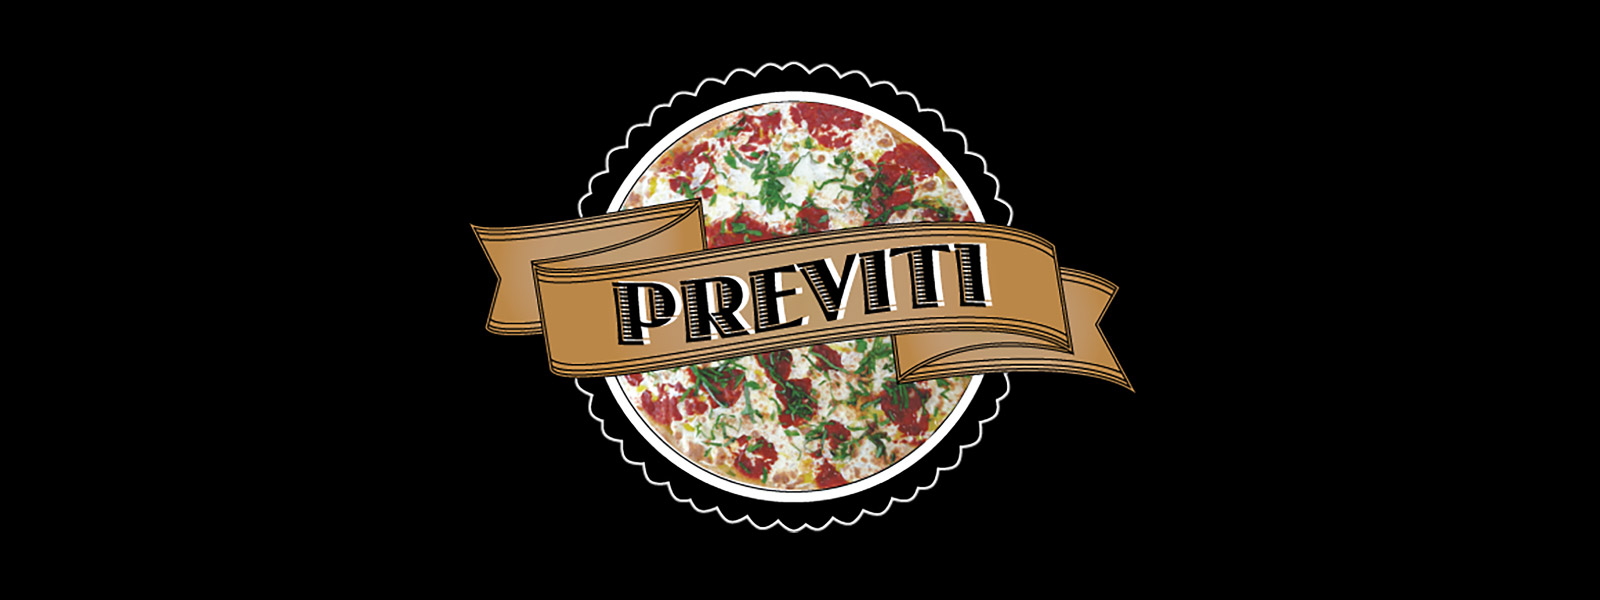 Preveitti-Pizza-header